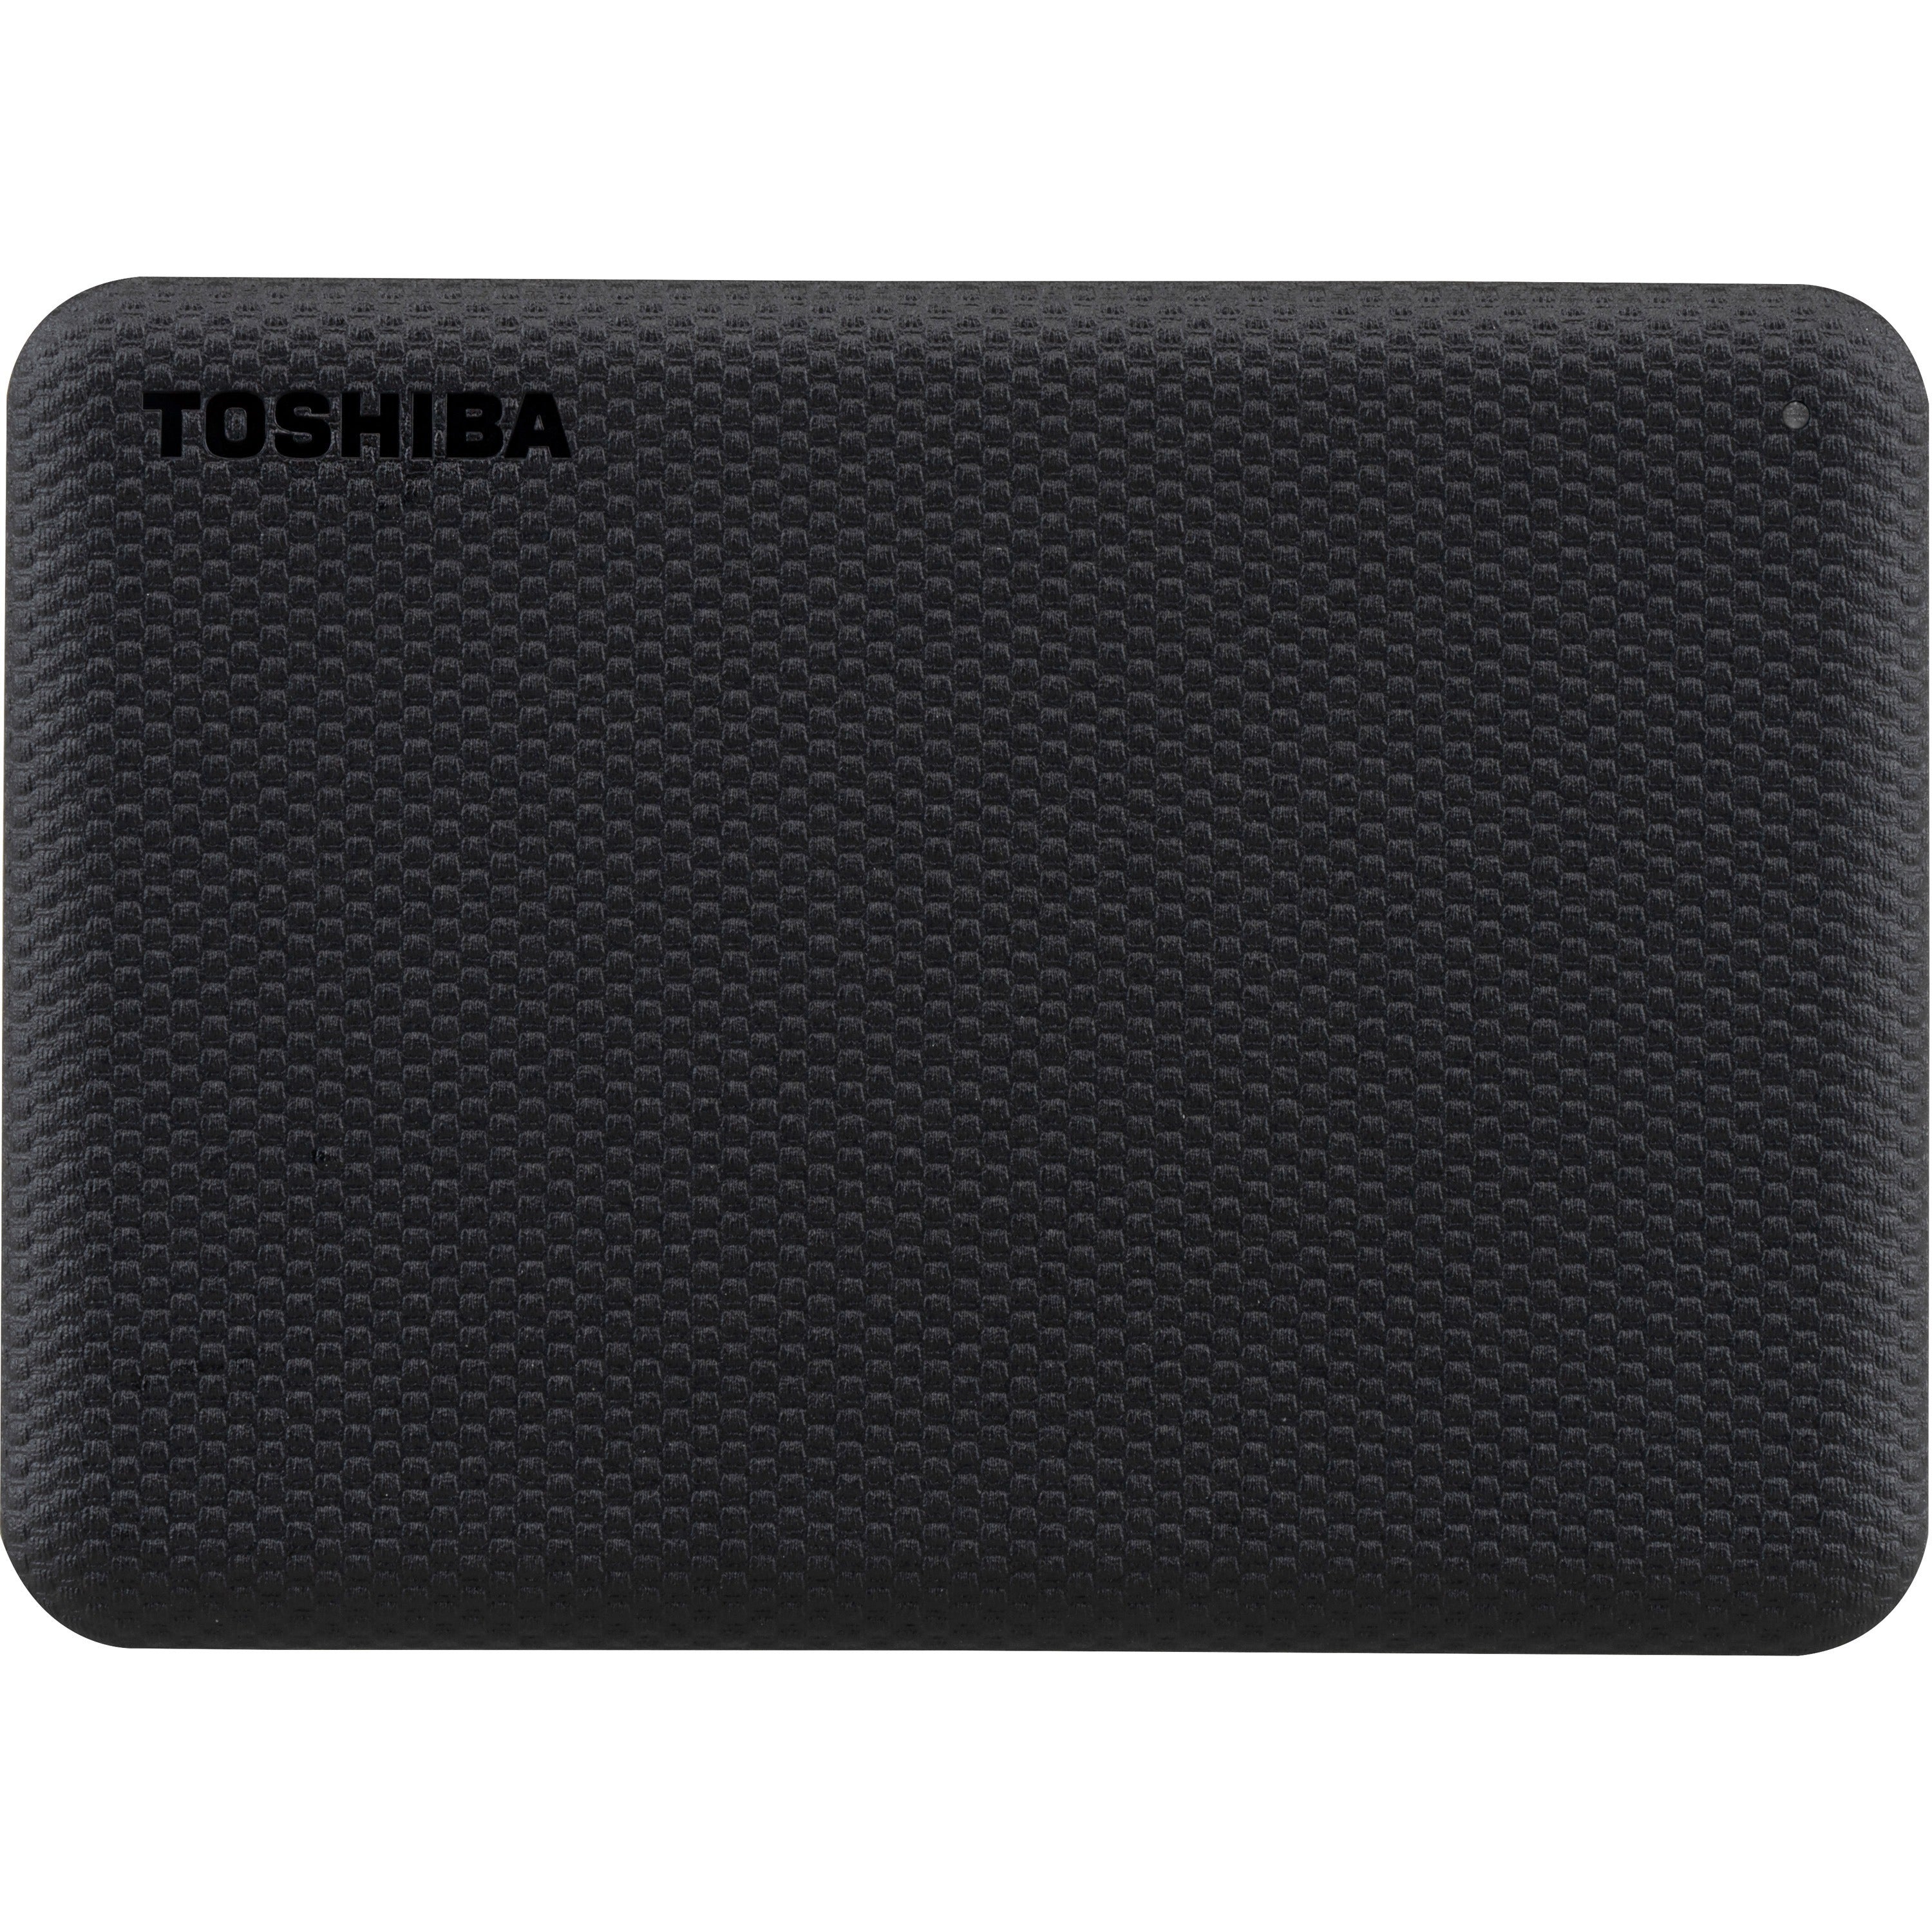 toshiba-canvio-advance-hdtca20xk3aa-2-tb-portable-hard-drive-external-black-usb-30-1-pack_toshdtca20xk3aa - 2